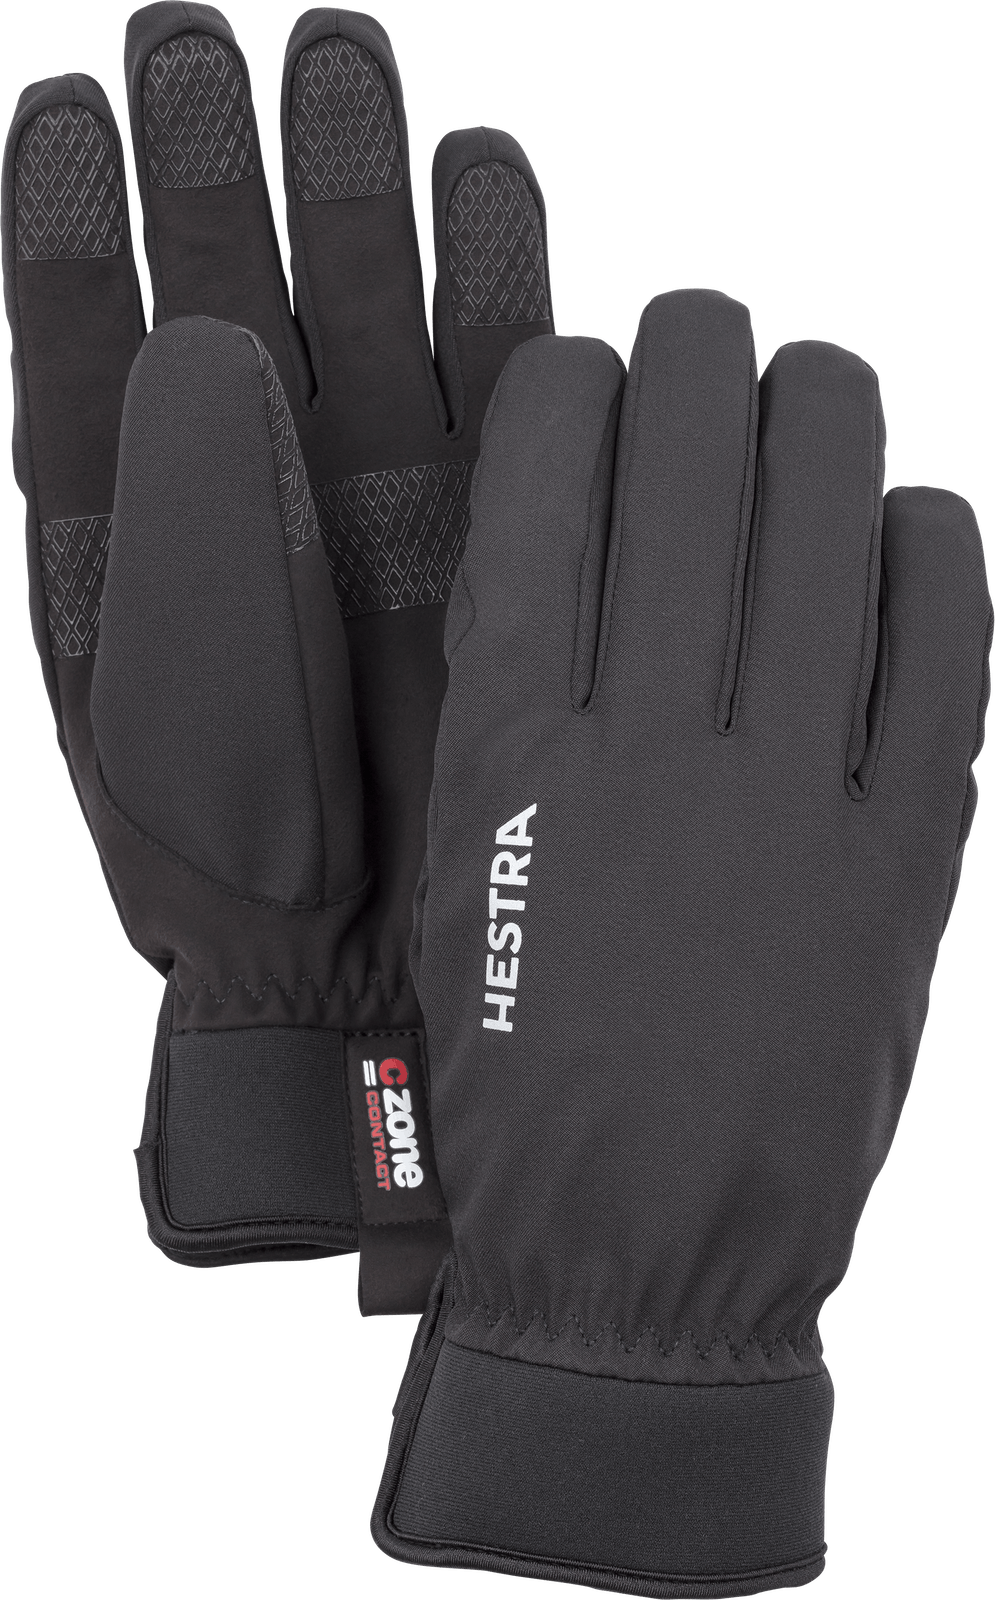 Se Hestra CZone Contact Glove Handsker Str 10 hos Outdoor i Centrum